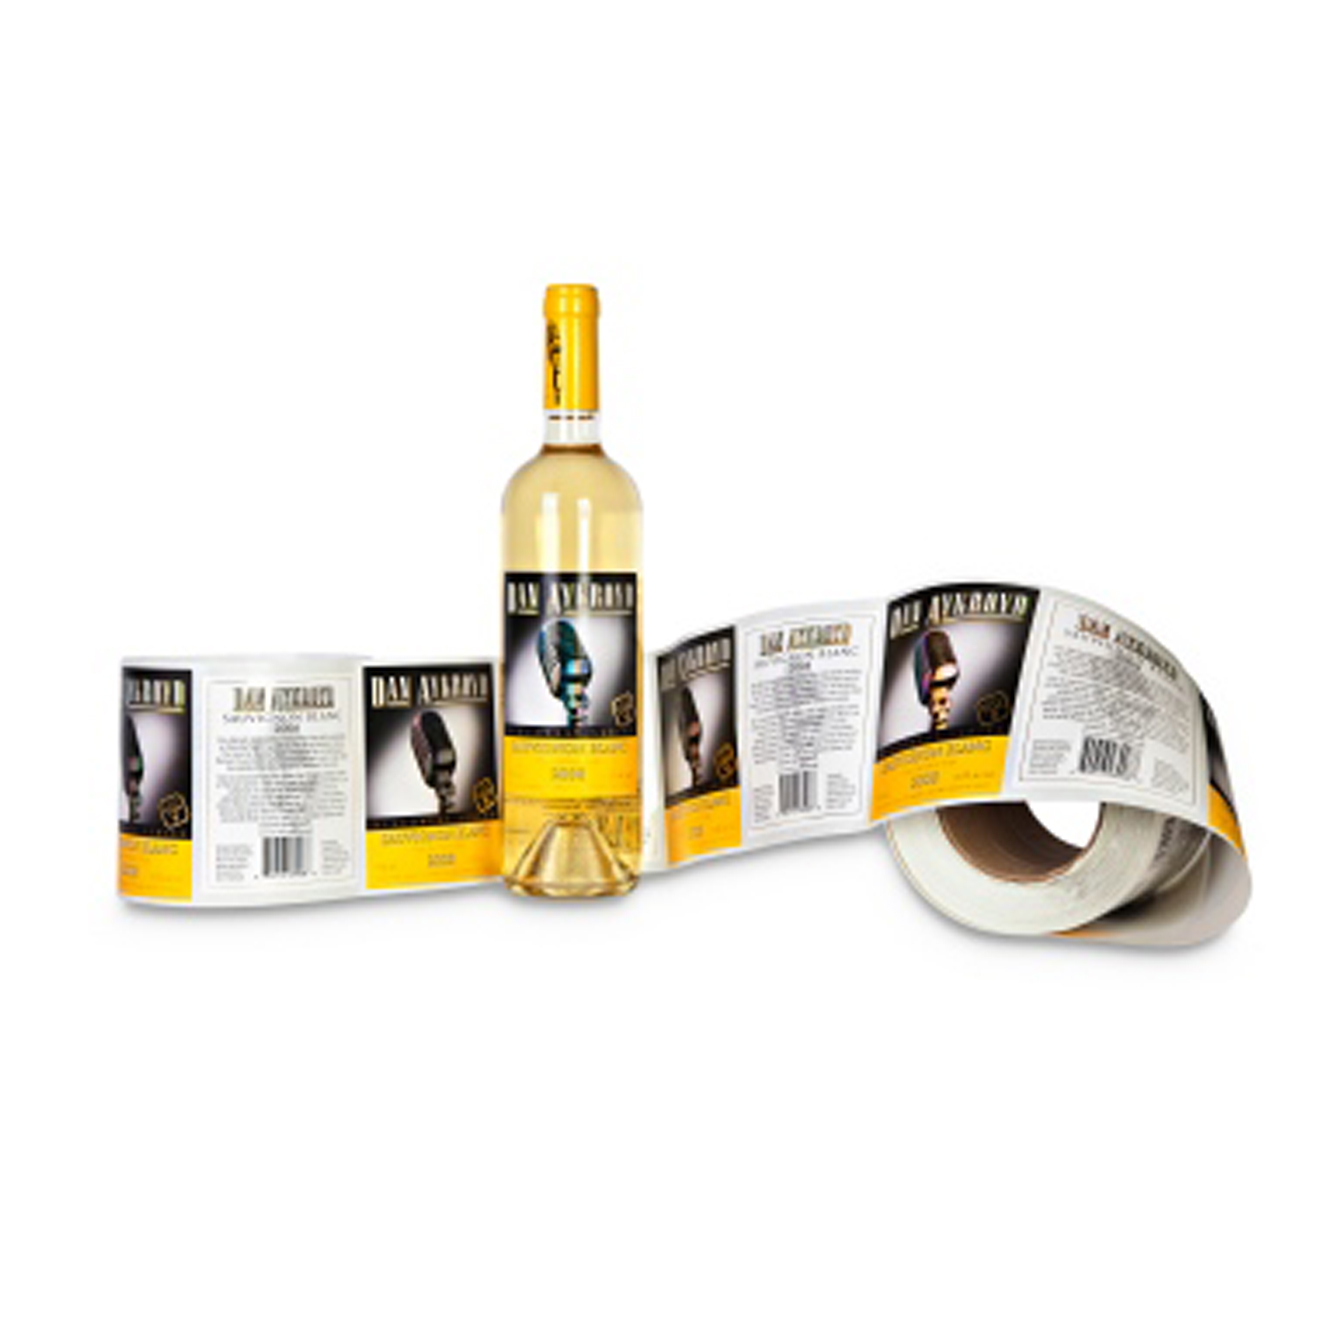 https://bigbanner.com.au/wp-content/uploads/2020/01/wine-sticker-label-4.jpg